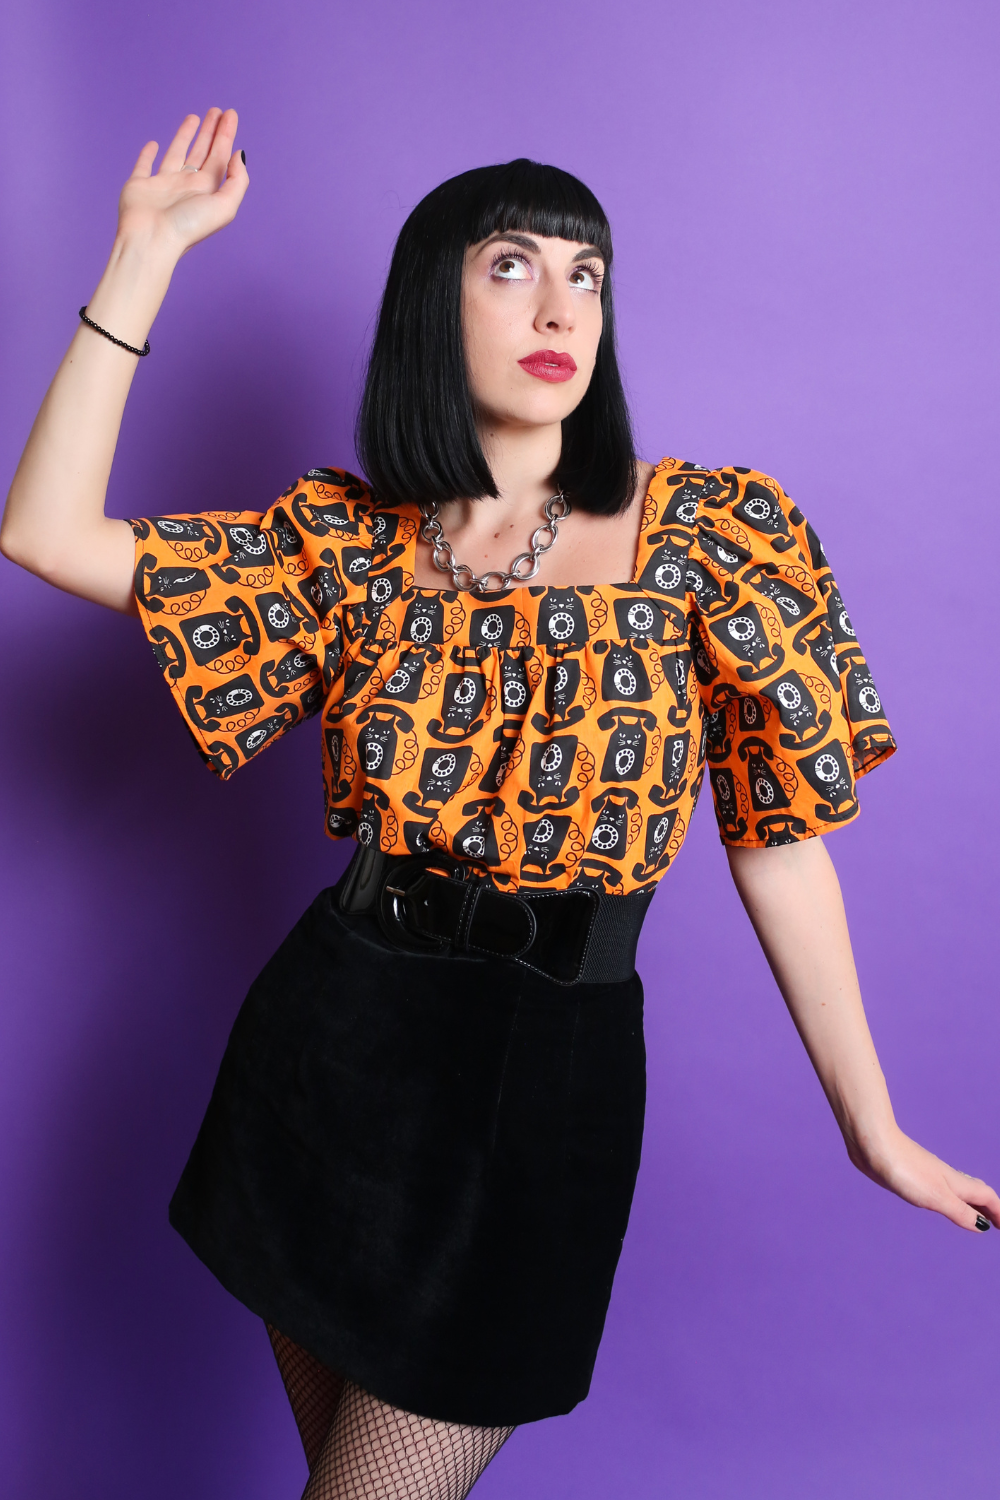 Black haired model in orange and black cat phone print top & mini skirt, posing dramatically